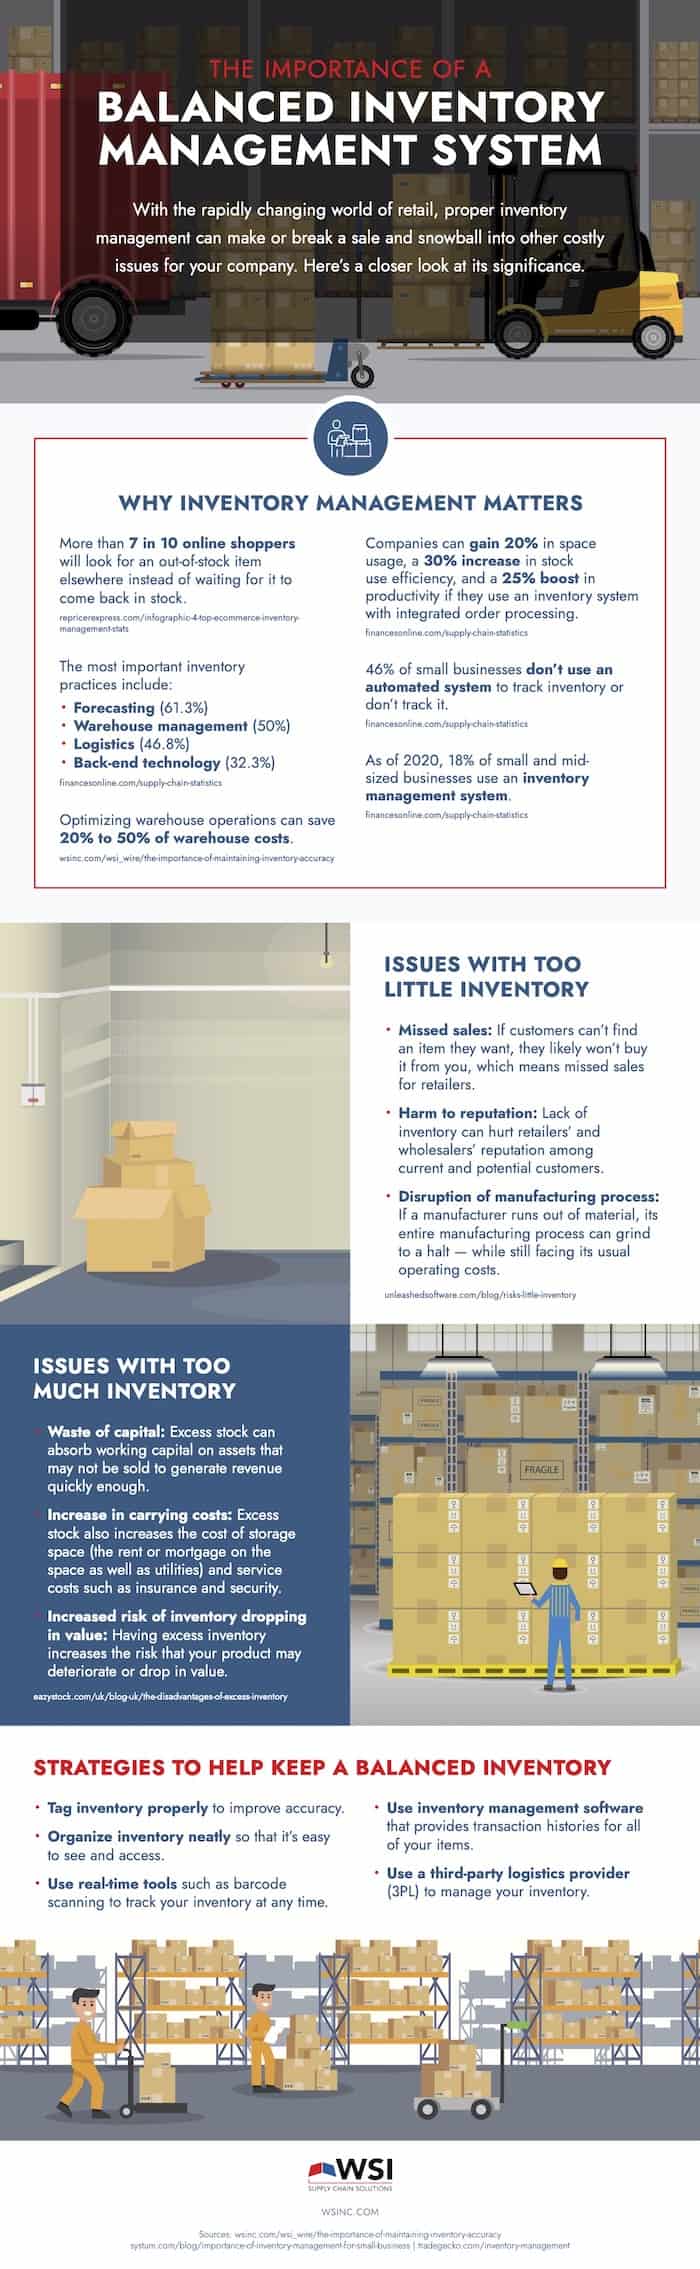 Inventory Management Best Practices
